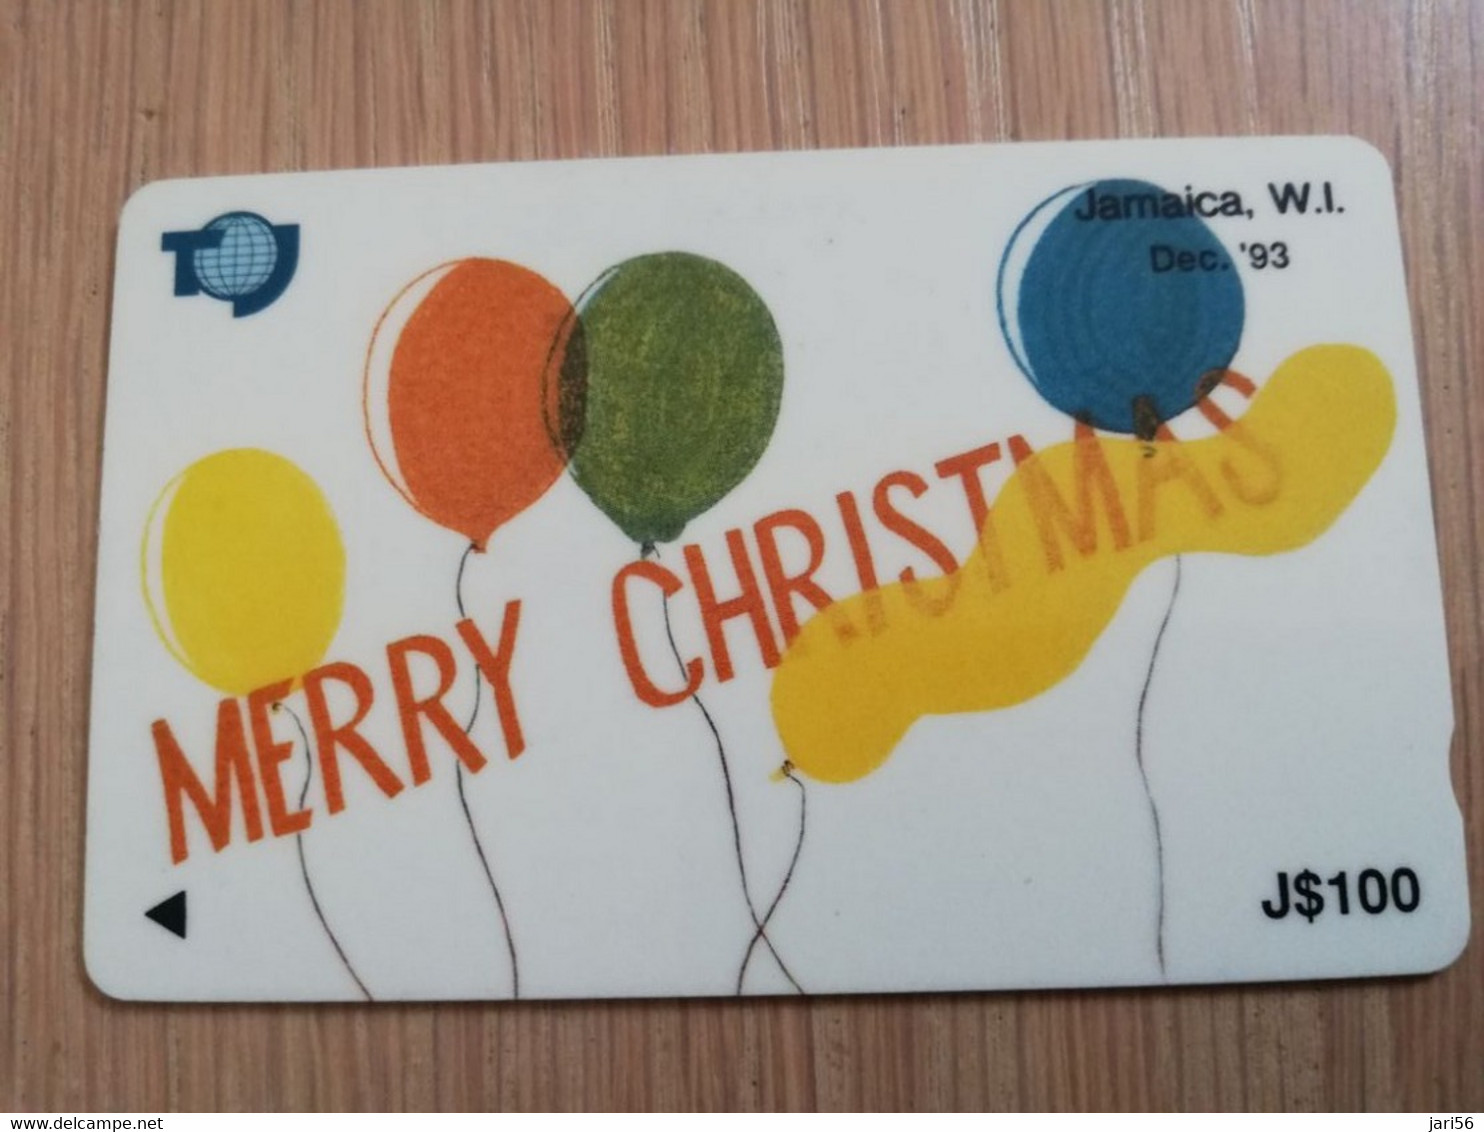 JAMAICA  J$100-  GPT CARD   MERRY CHRISTMAS  CONTROL NR: 16JAMC   Fine Used Card  **3238** - Jamaica